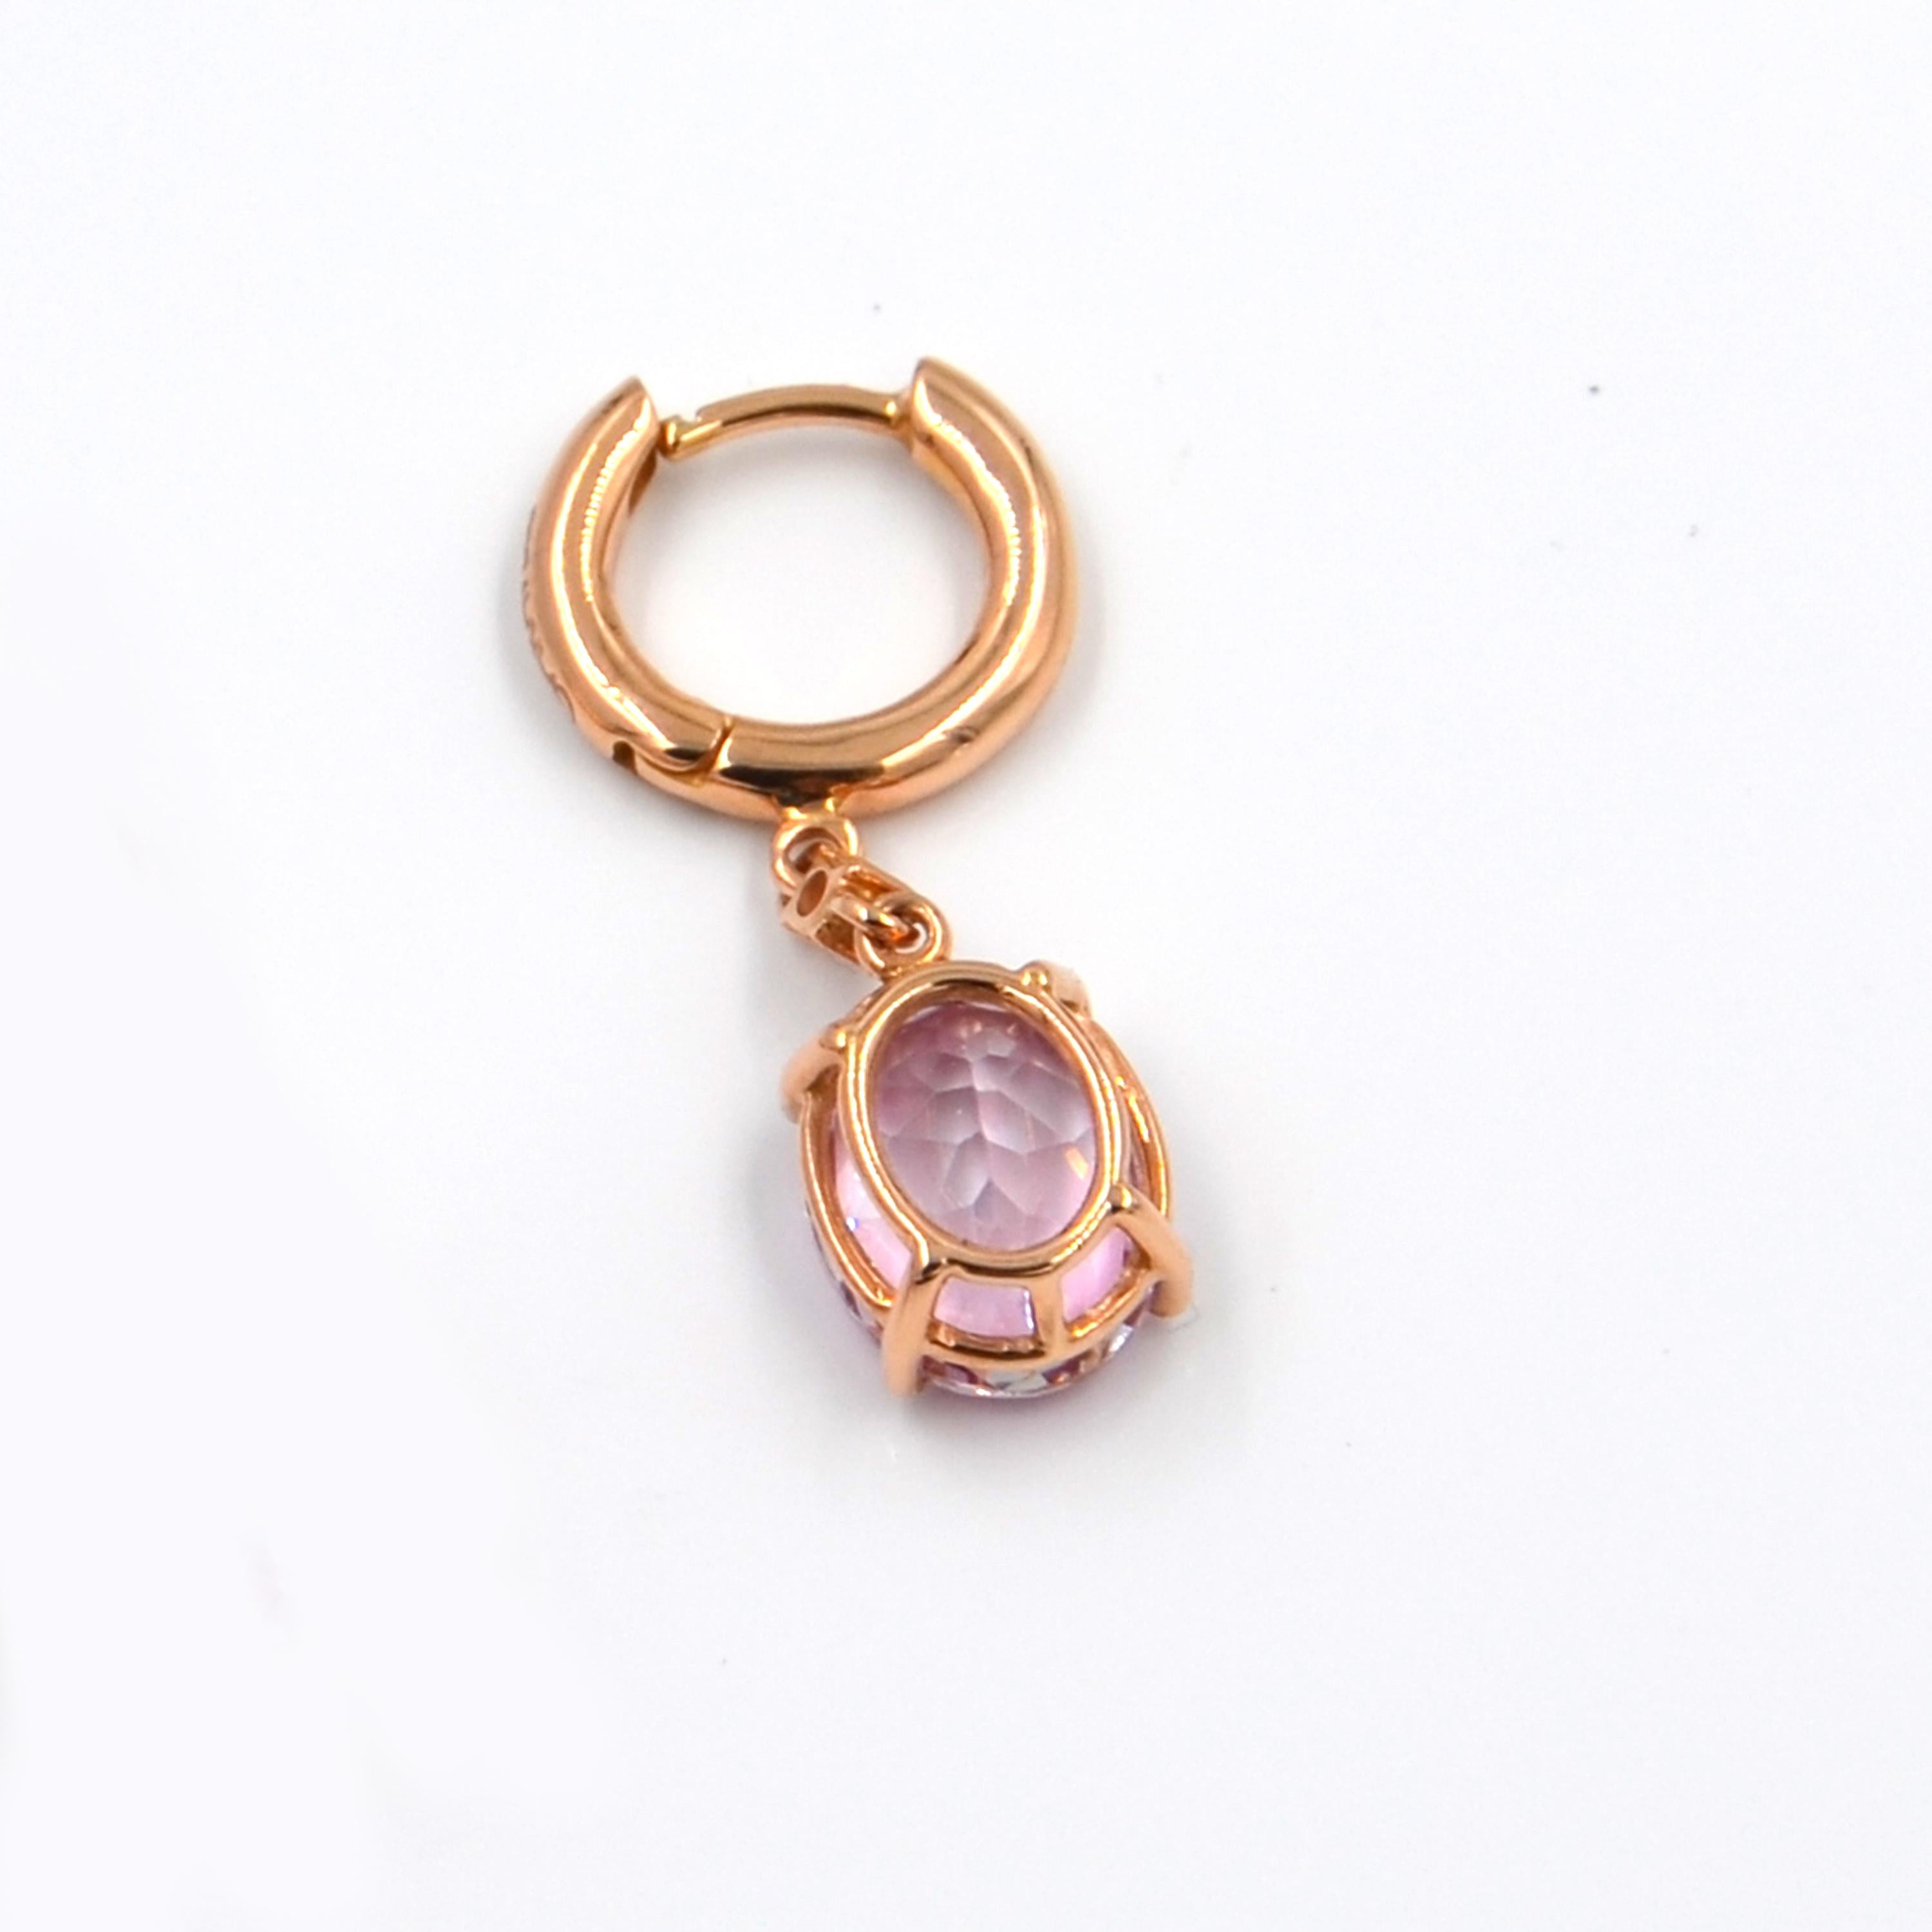 Round Cut 18 Karat Rose Gold Garavelli Earrings Featuring Pink Topaz and Diamonds